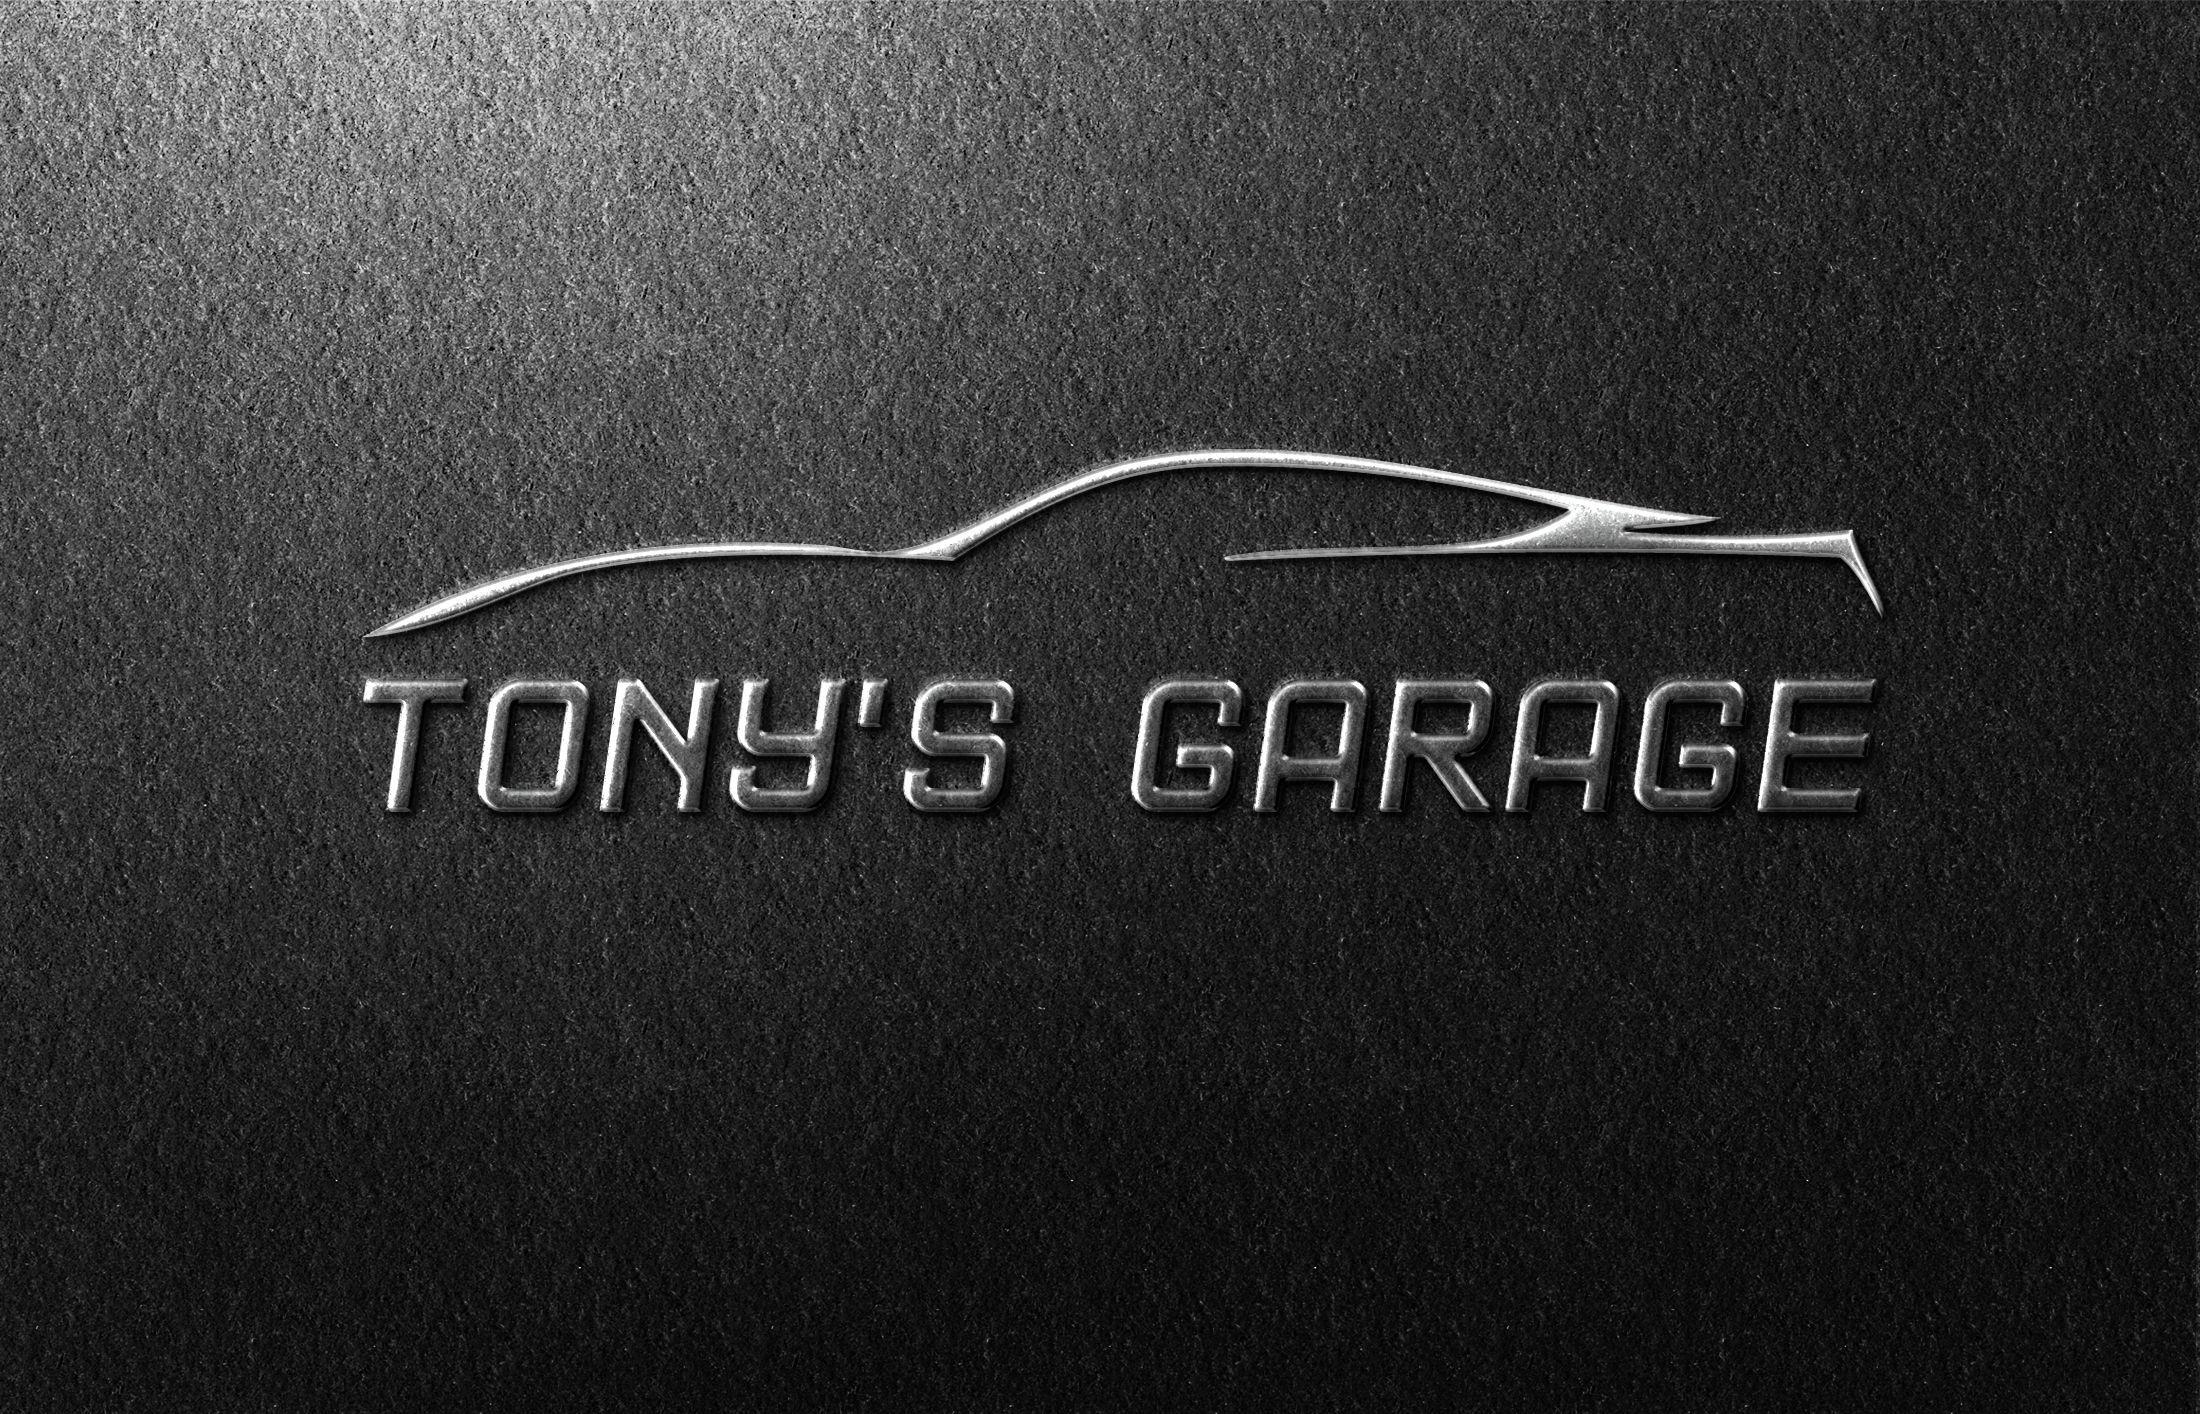 Auto Garage Logo - Auto Garage Logo Design. Just need it to say George | Car Garages ...